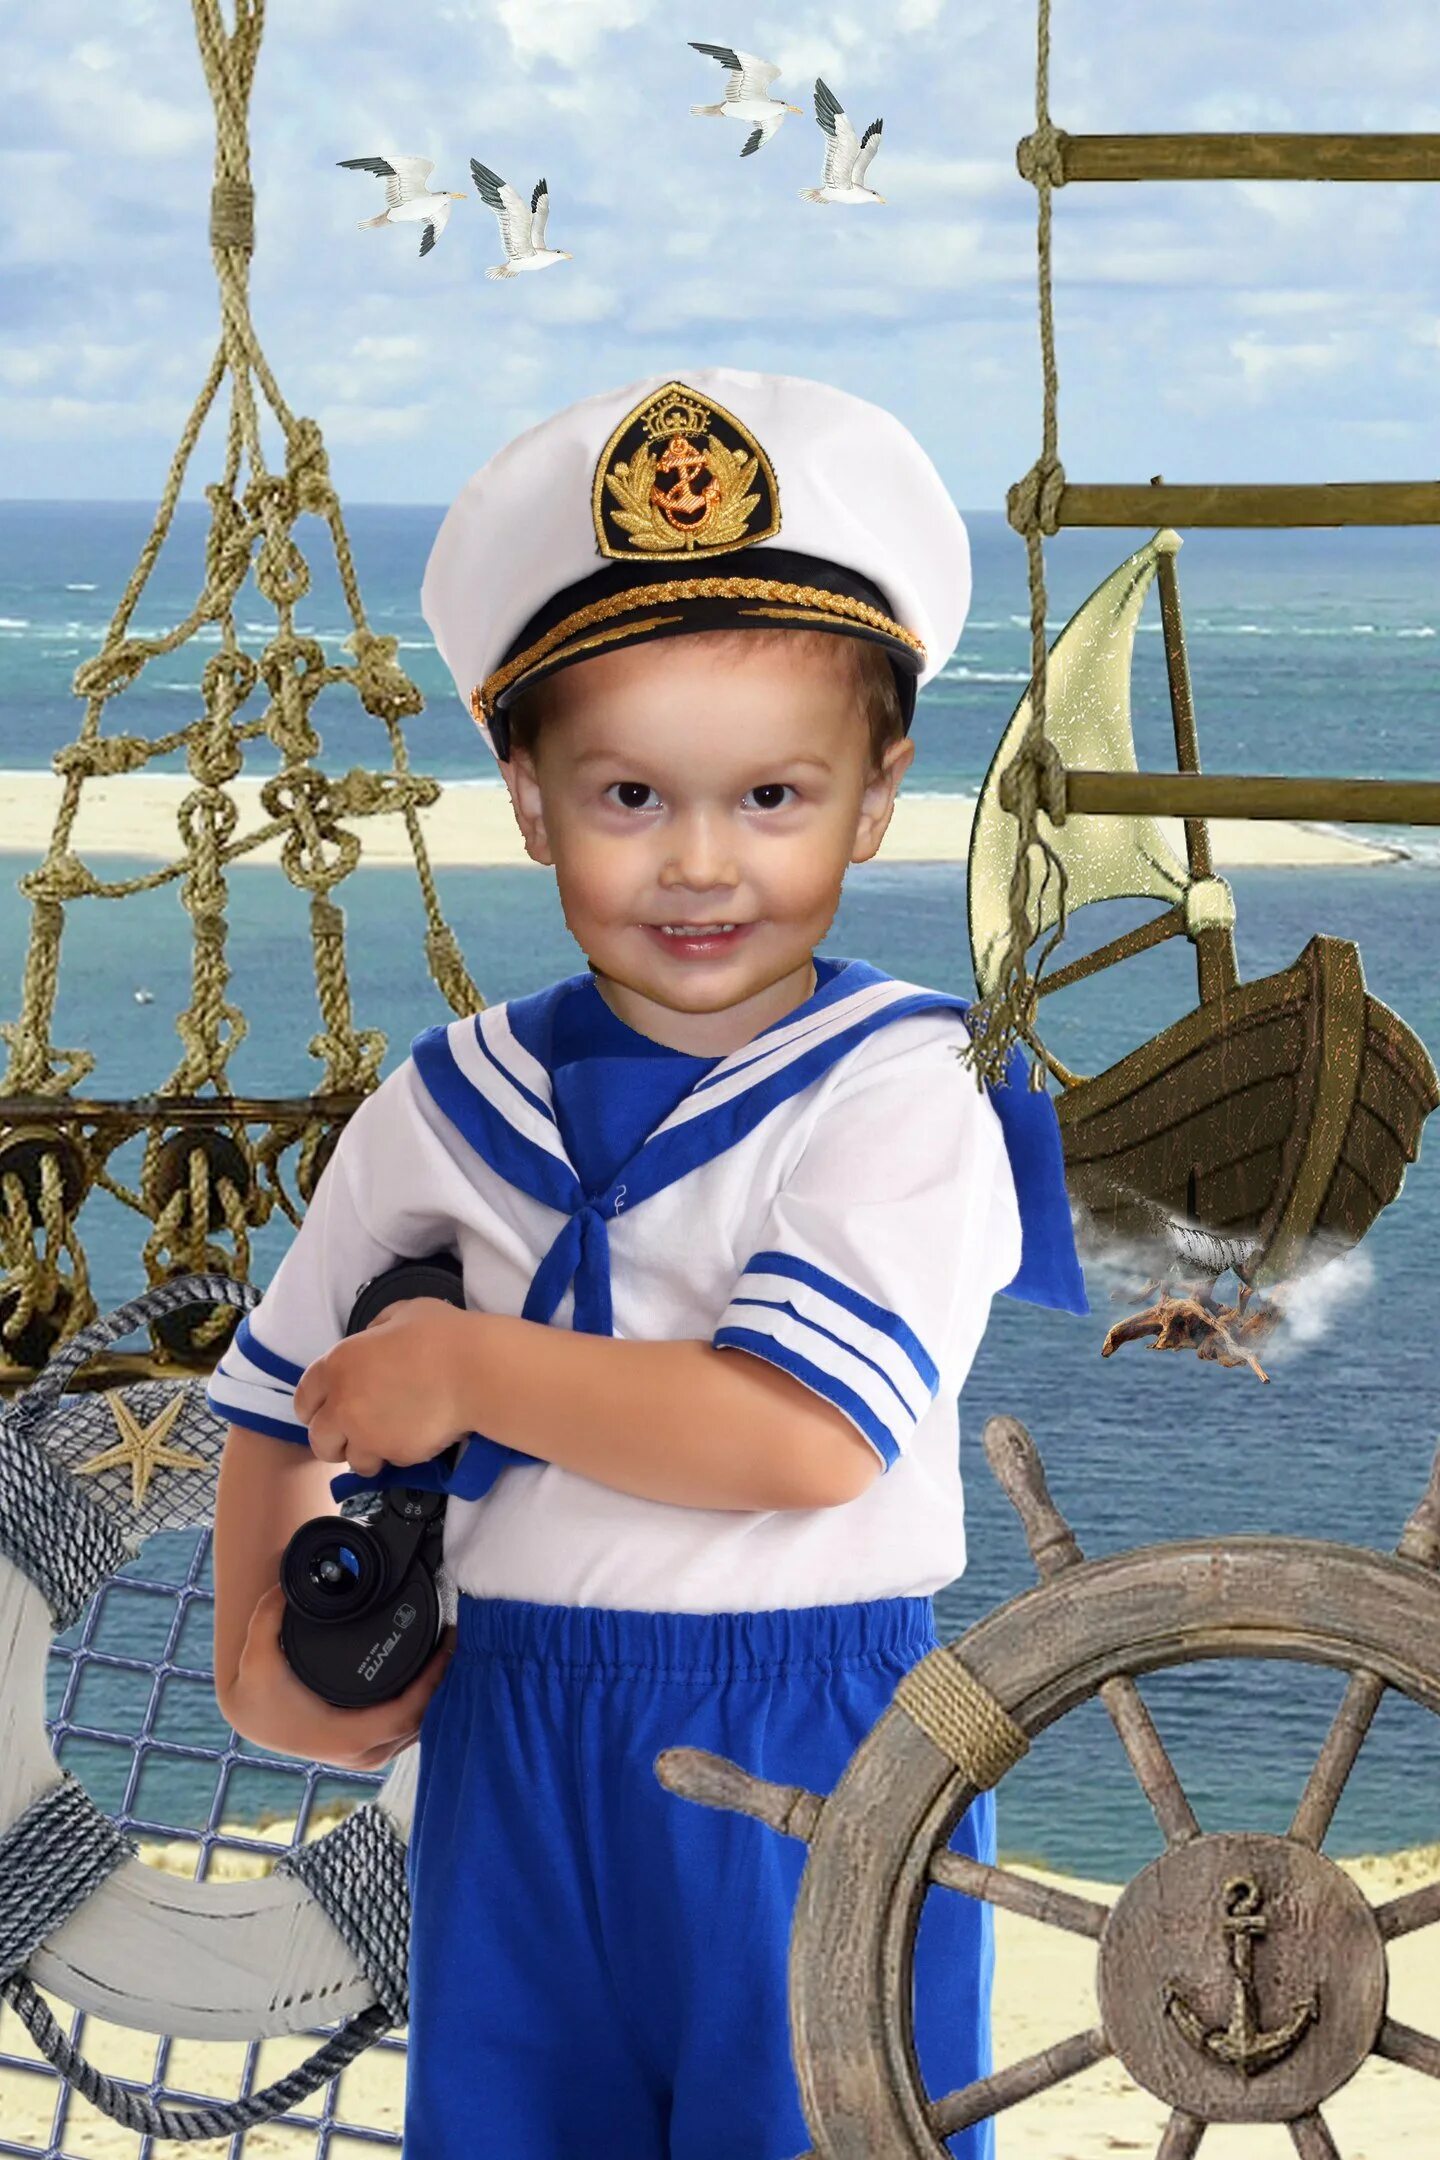 Капитан юнга. Моряк Юнга Капитан. Детский морской костюм. Детские костюмы на морскую тематику.